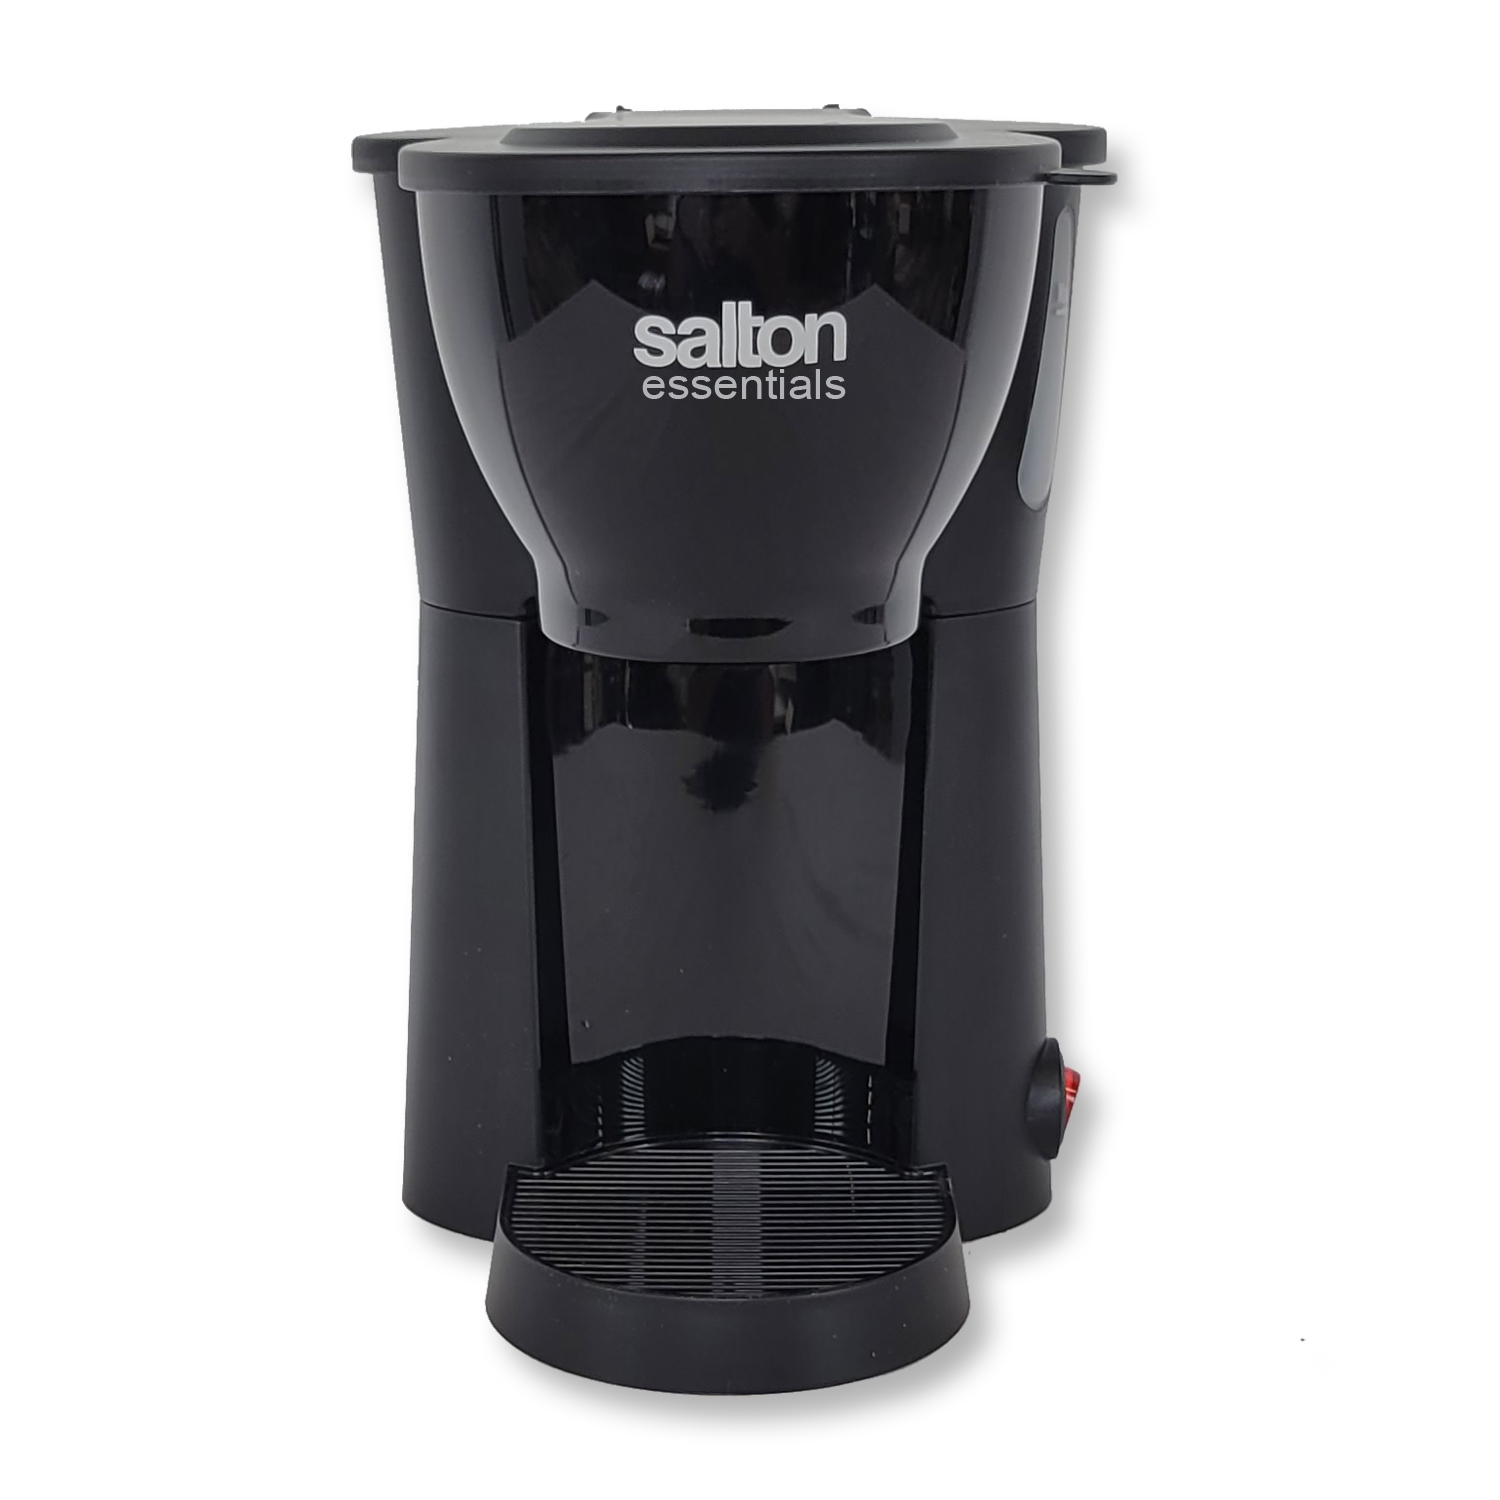 Salton Essentials Coffee Maker Compact Space Saving 1 Cup Black